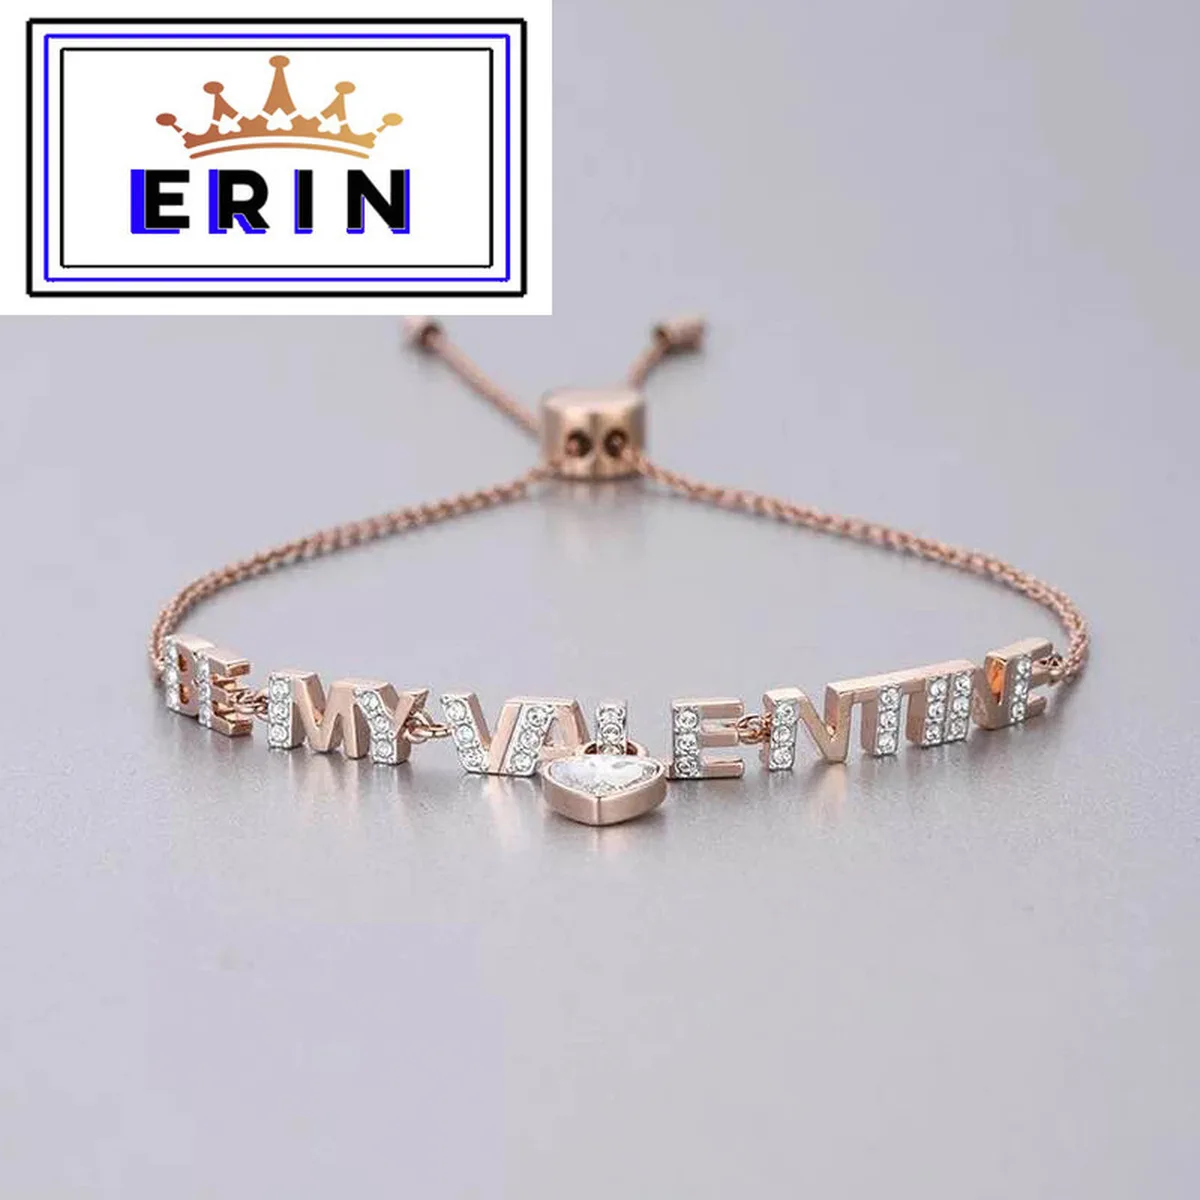 

ERIN High quality SWA, elegant romantic exquisite love letter bracelet crystal gift